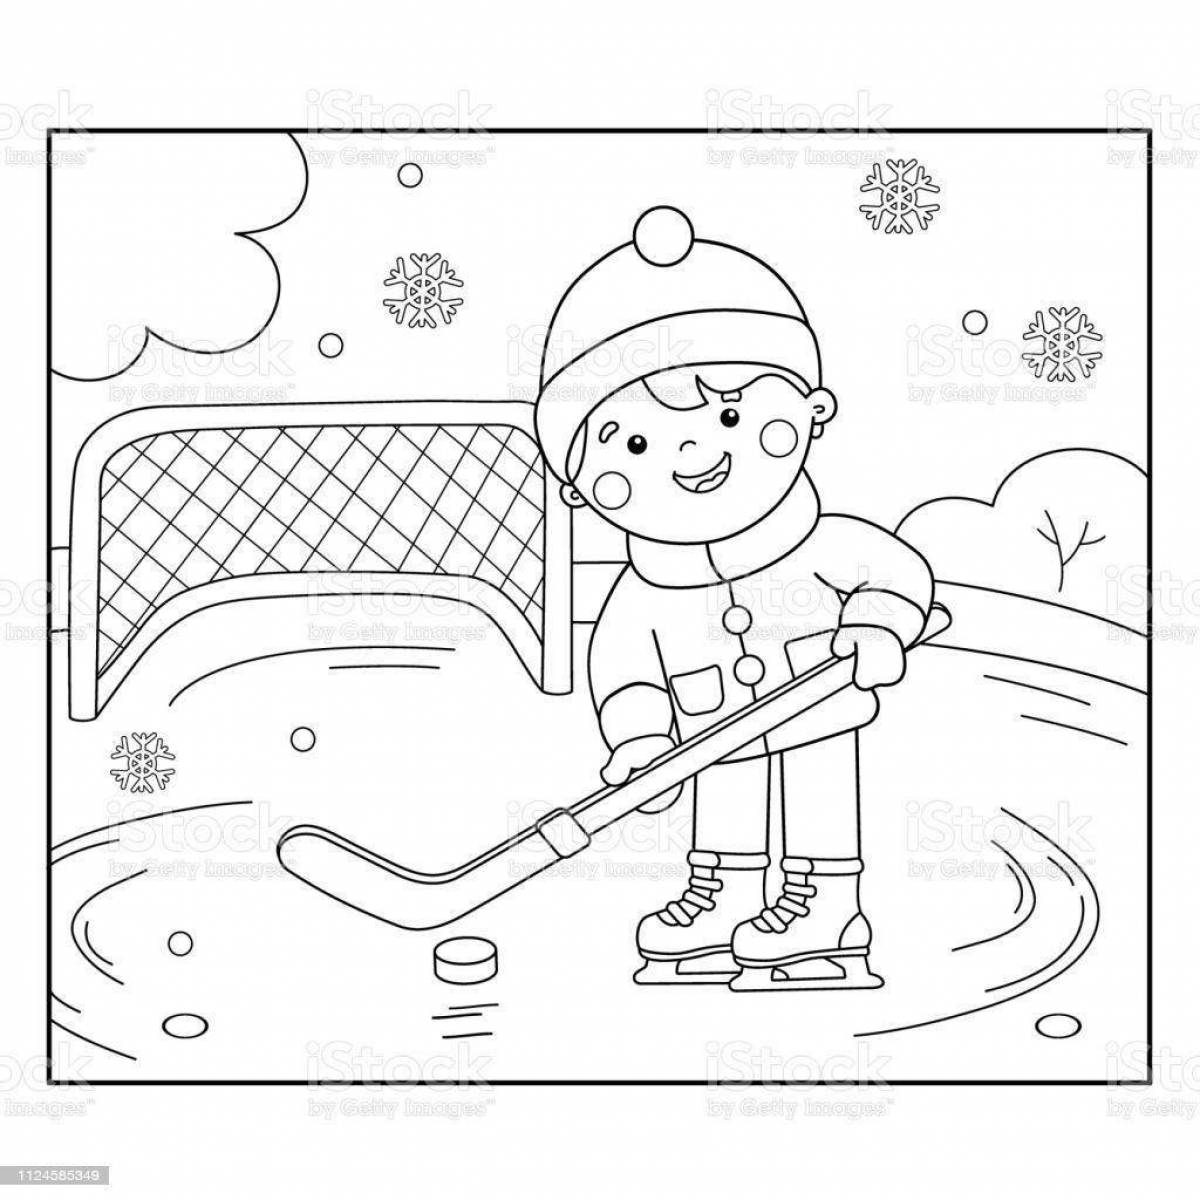 Dazzling picture of winter sports for children in kindergarten